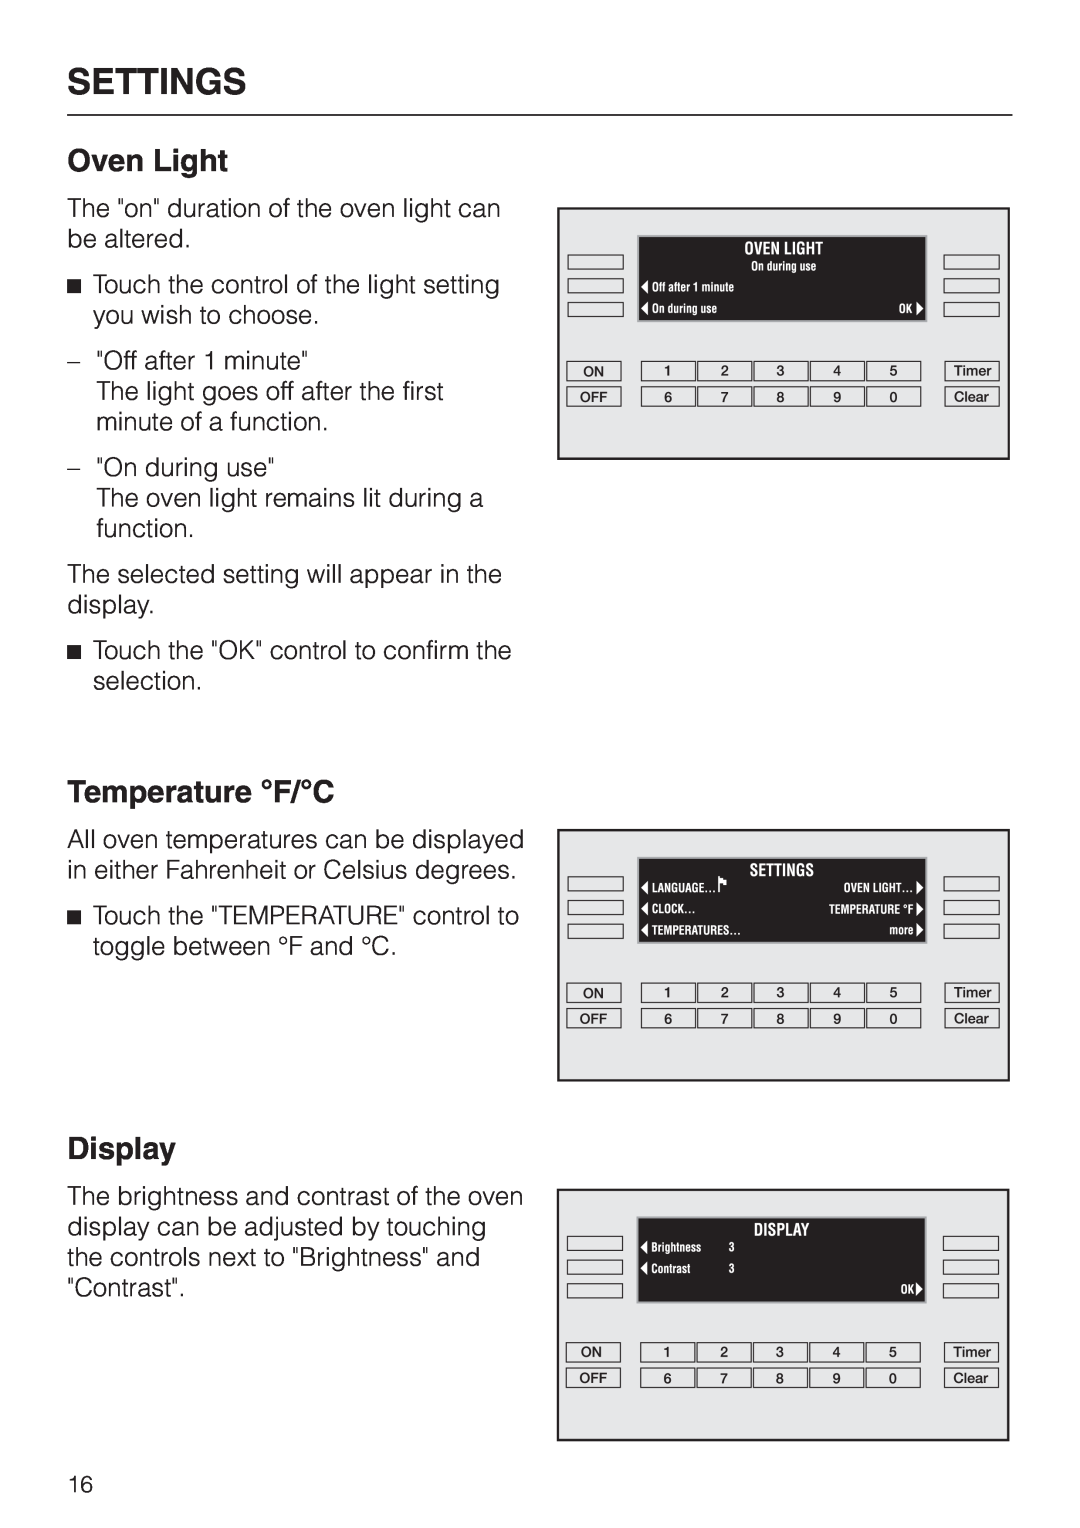 Miele H 394 manual Oven Light, Temperature F/C, Display, Settings 